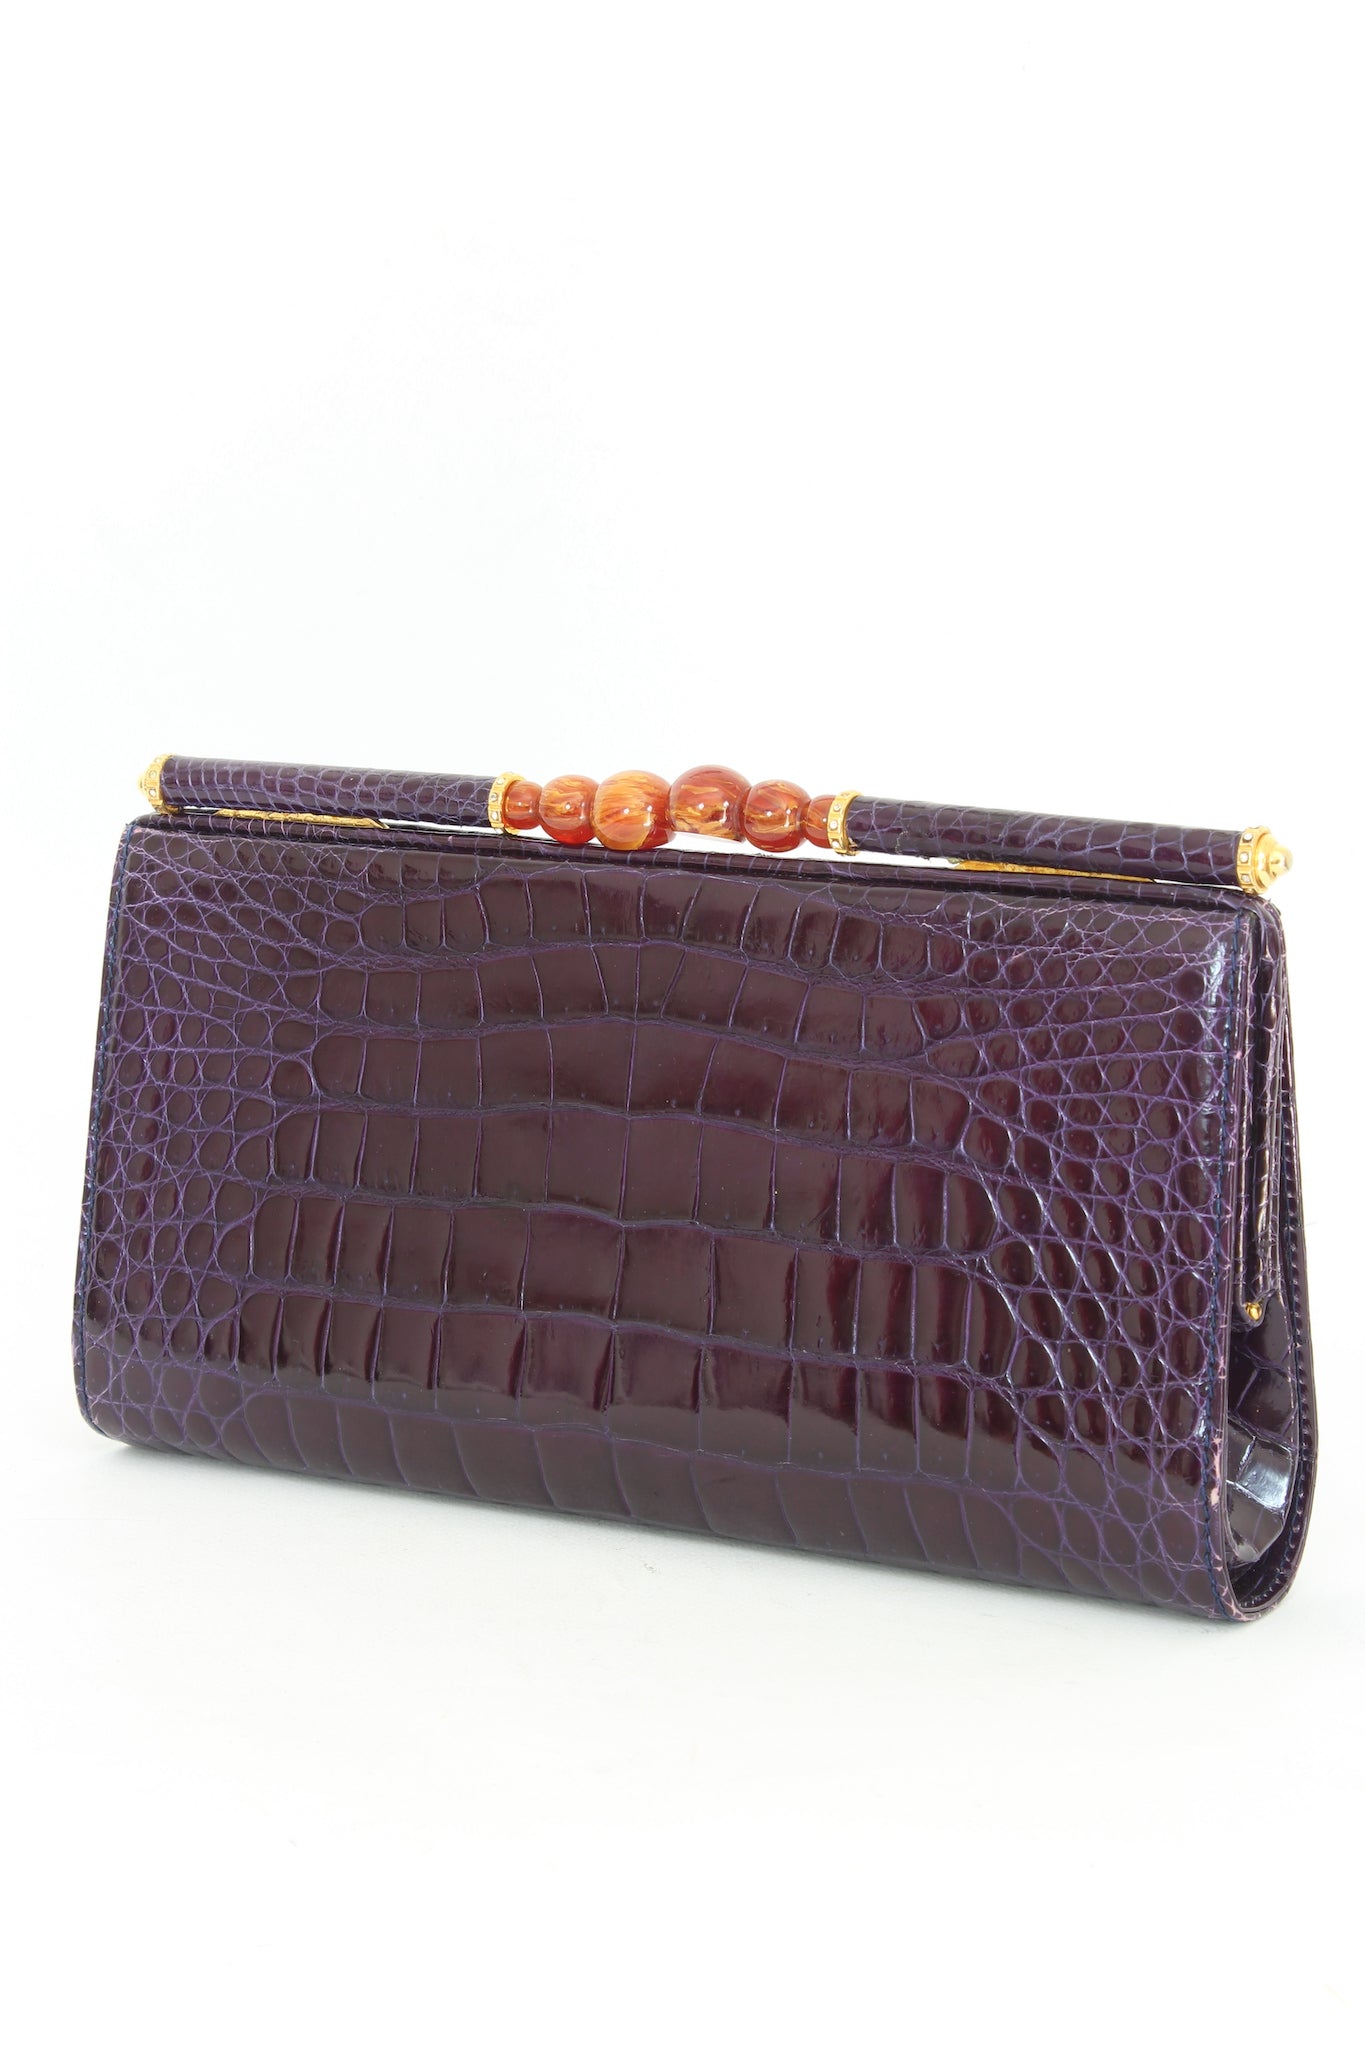 Gucci Violet Leather Crocodile Vintage Rare Clutch Bag 1970s